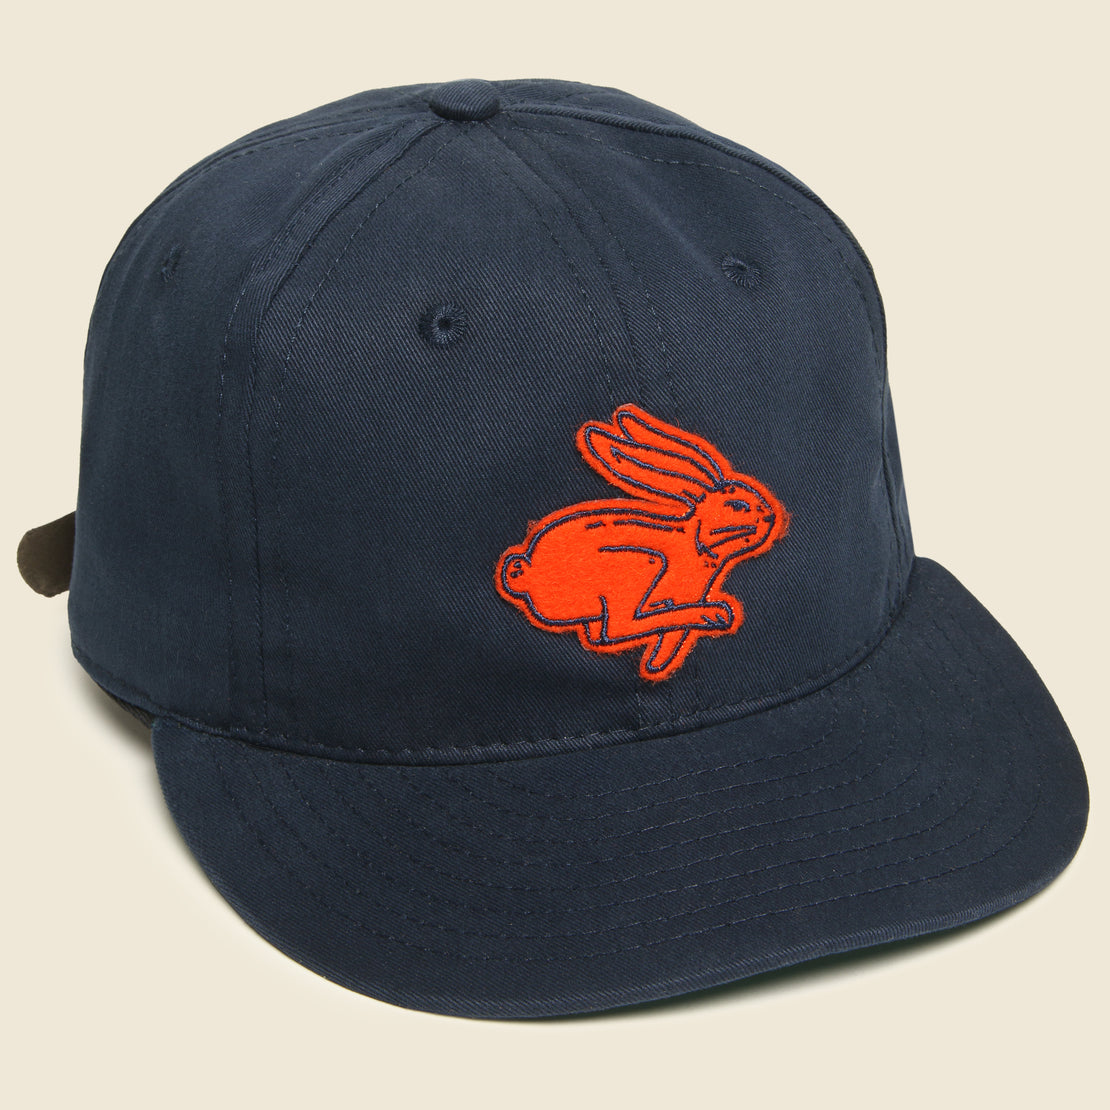 Ebbets Field Flannels Texas Playboys Cotton Hat - Navy